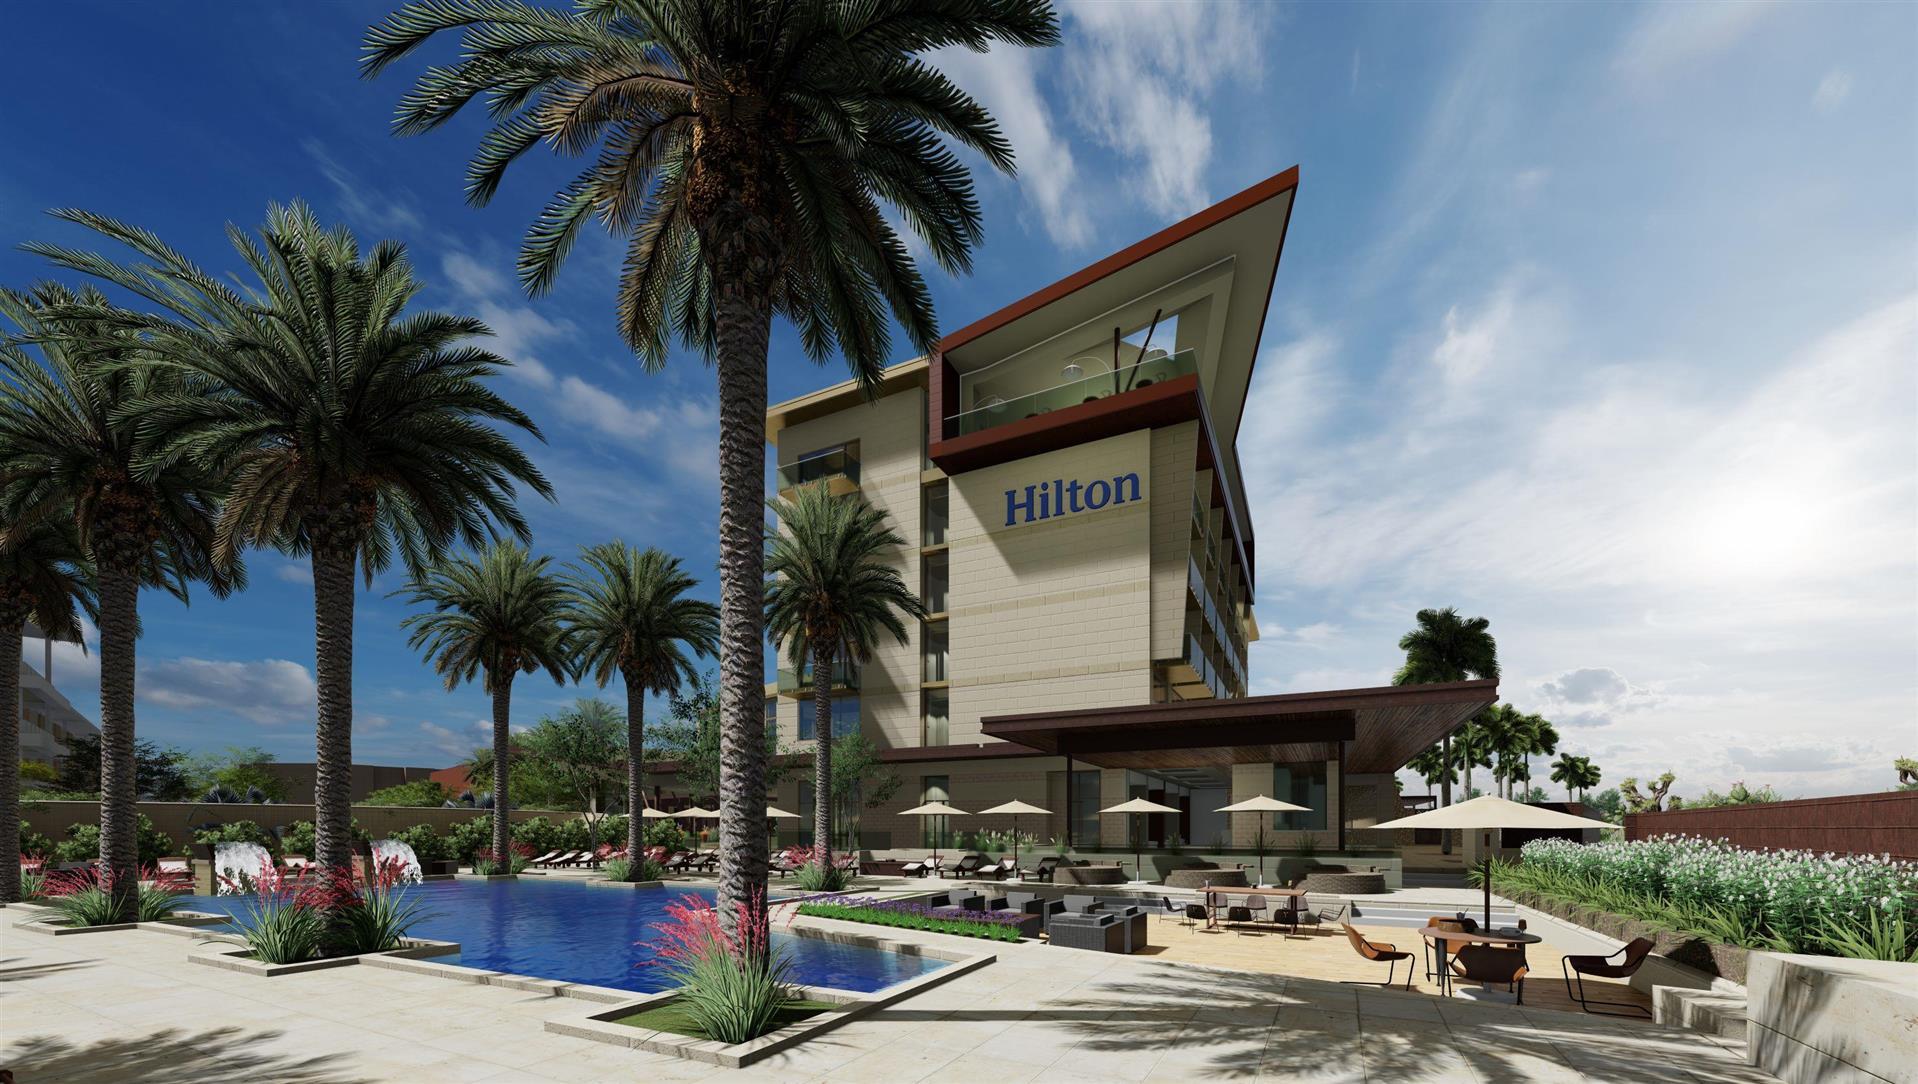 Hilton North Scottsdale at Cavasson in Scottsdale, AZ